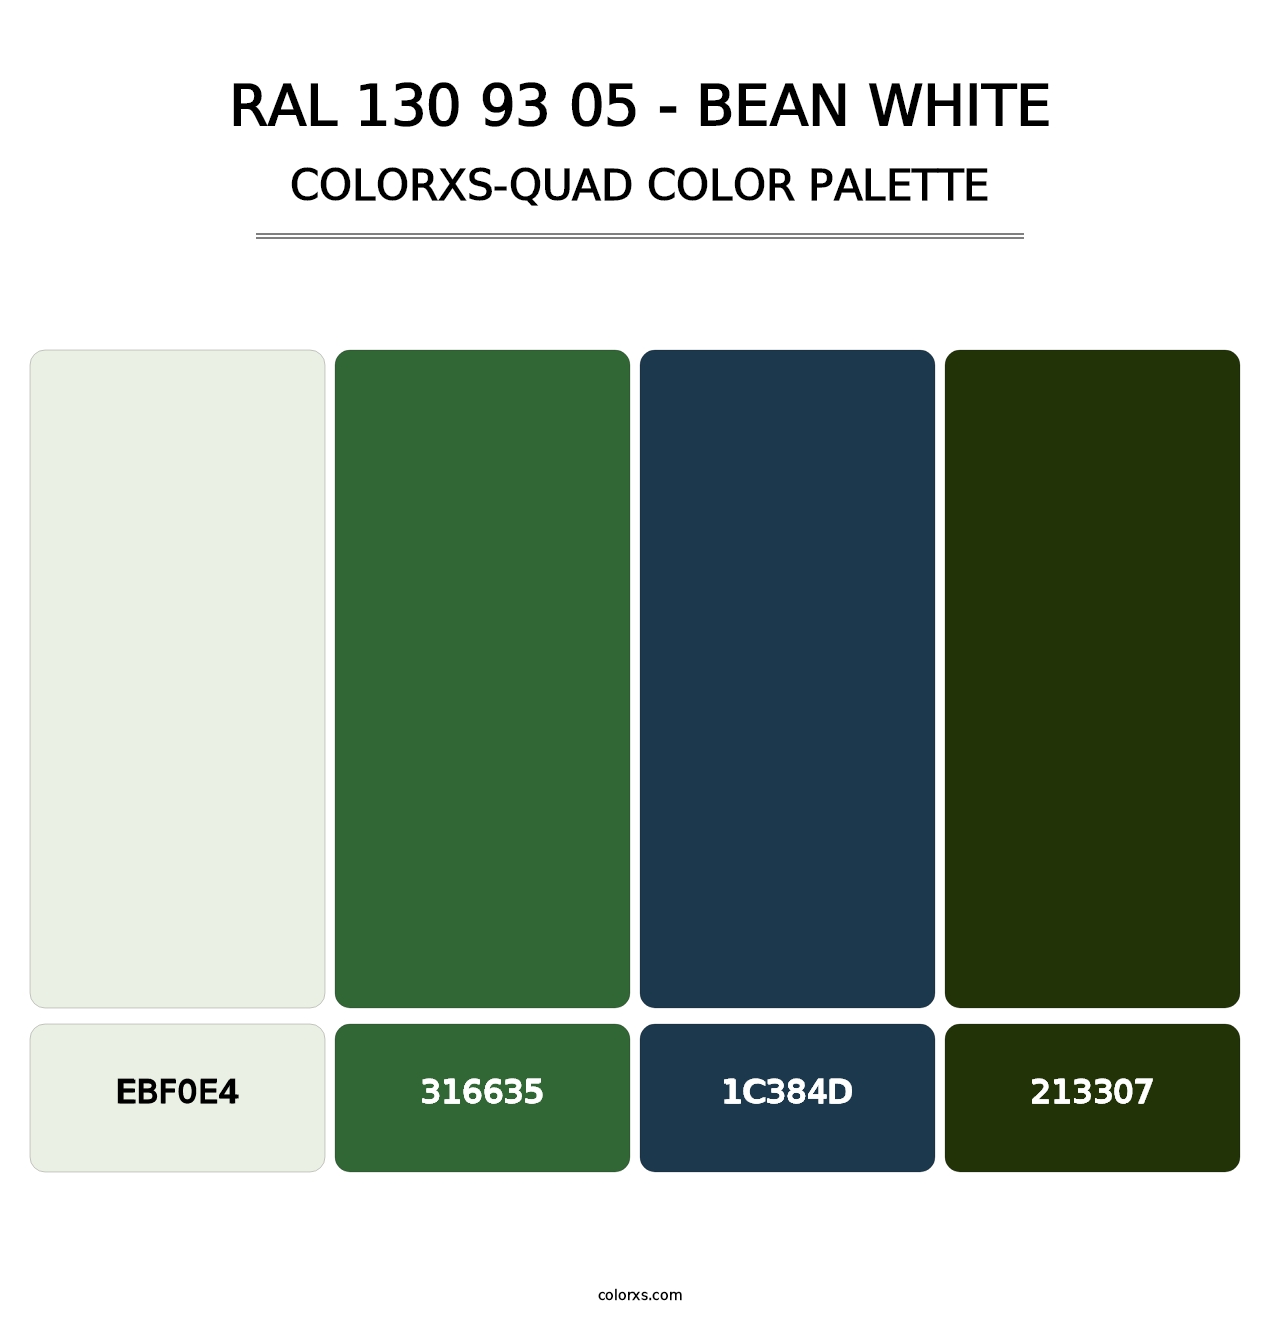 RAL 130 93 05 - Bean White - Colorxs Quad Palette